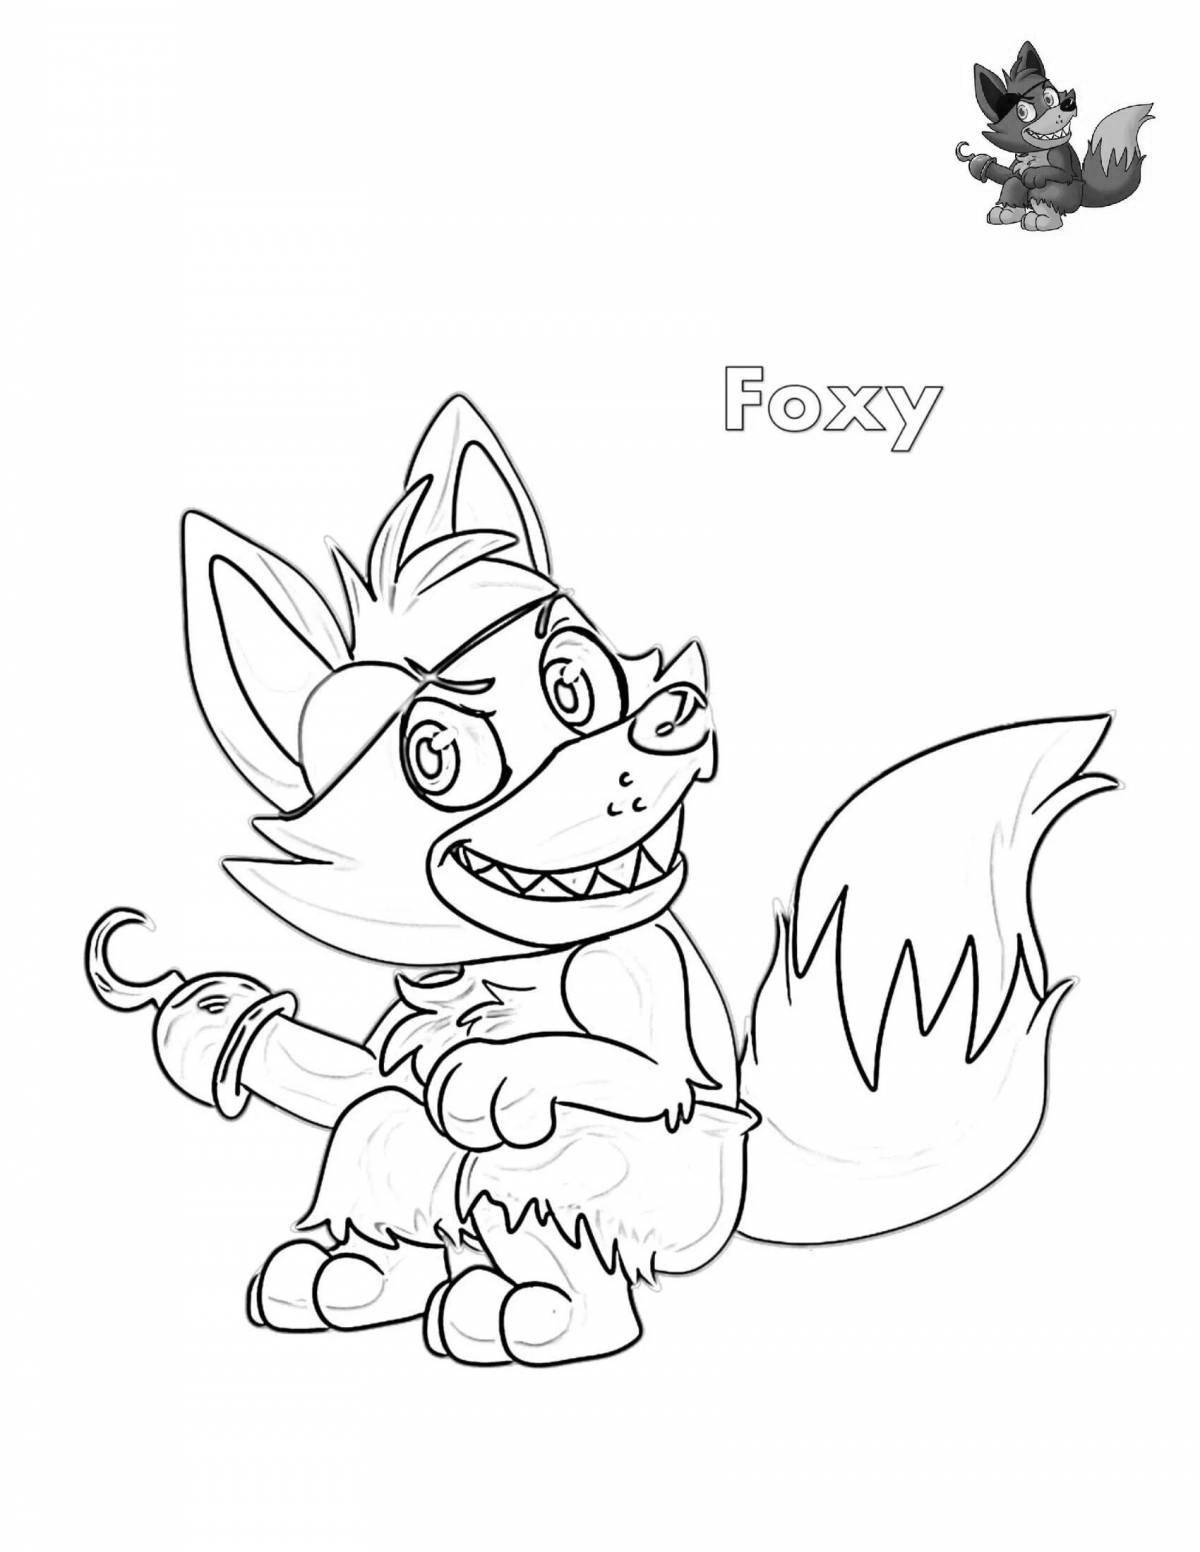 Fancy boo foxy coloring